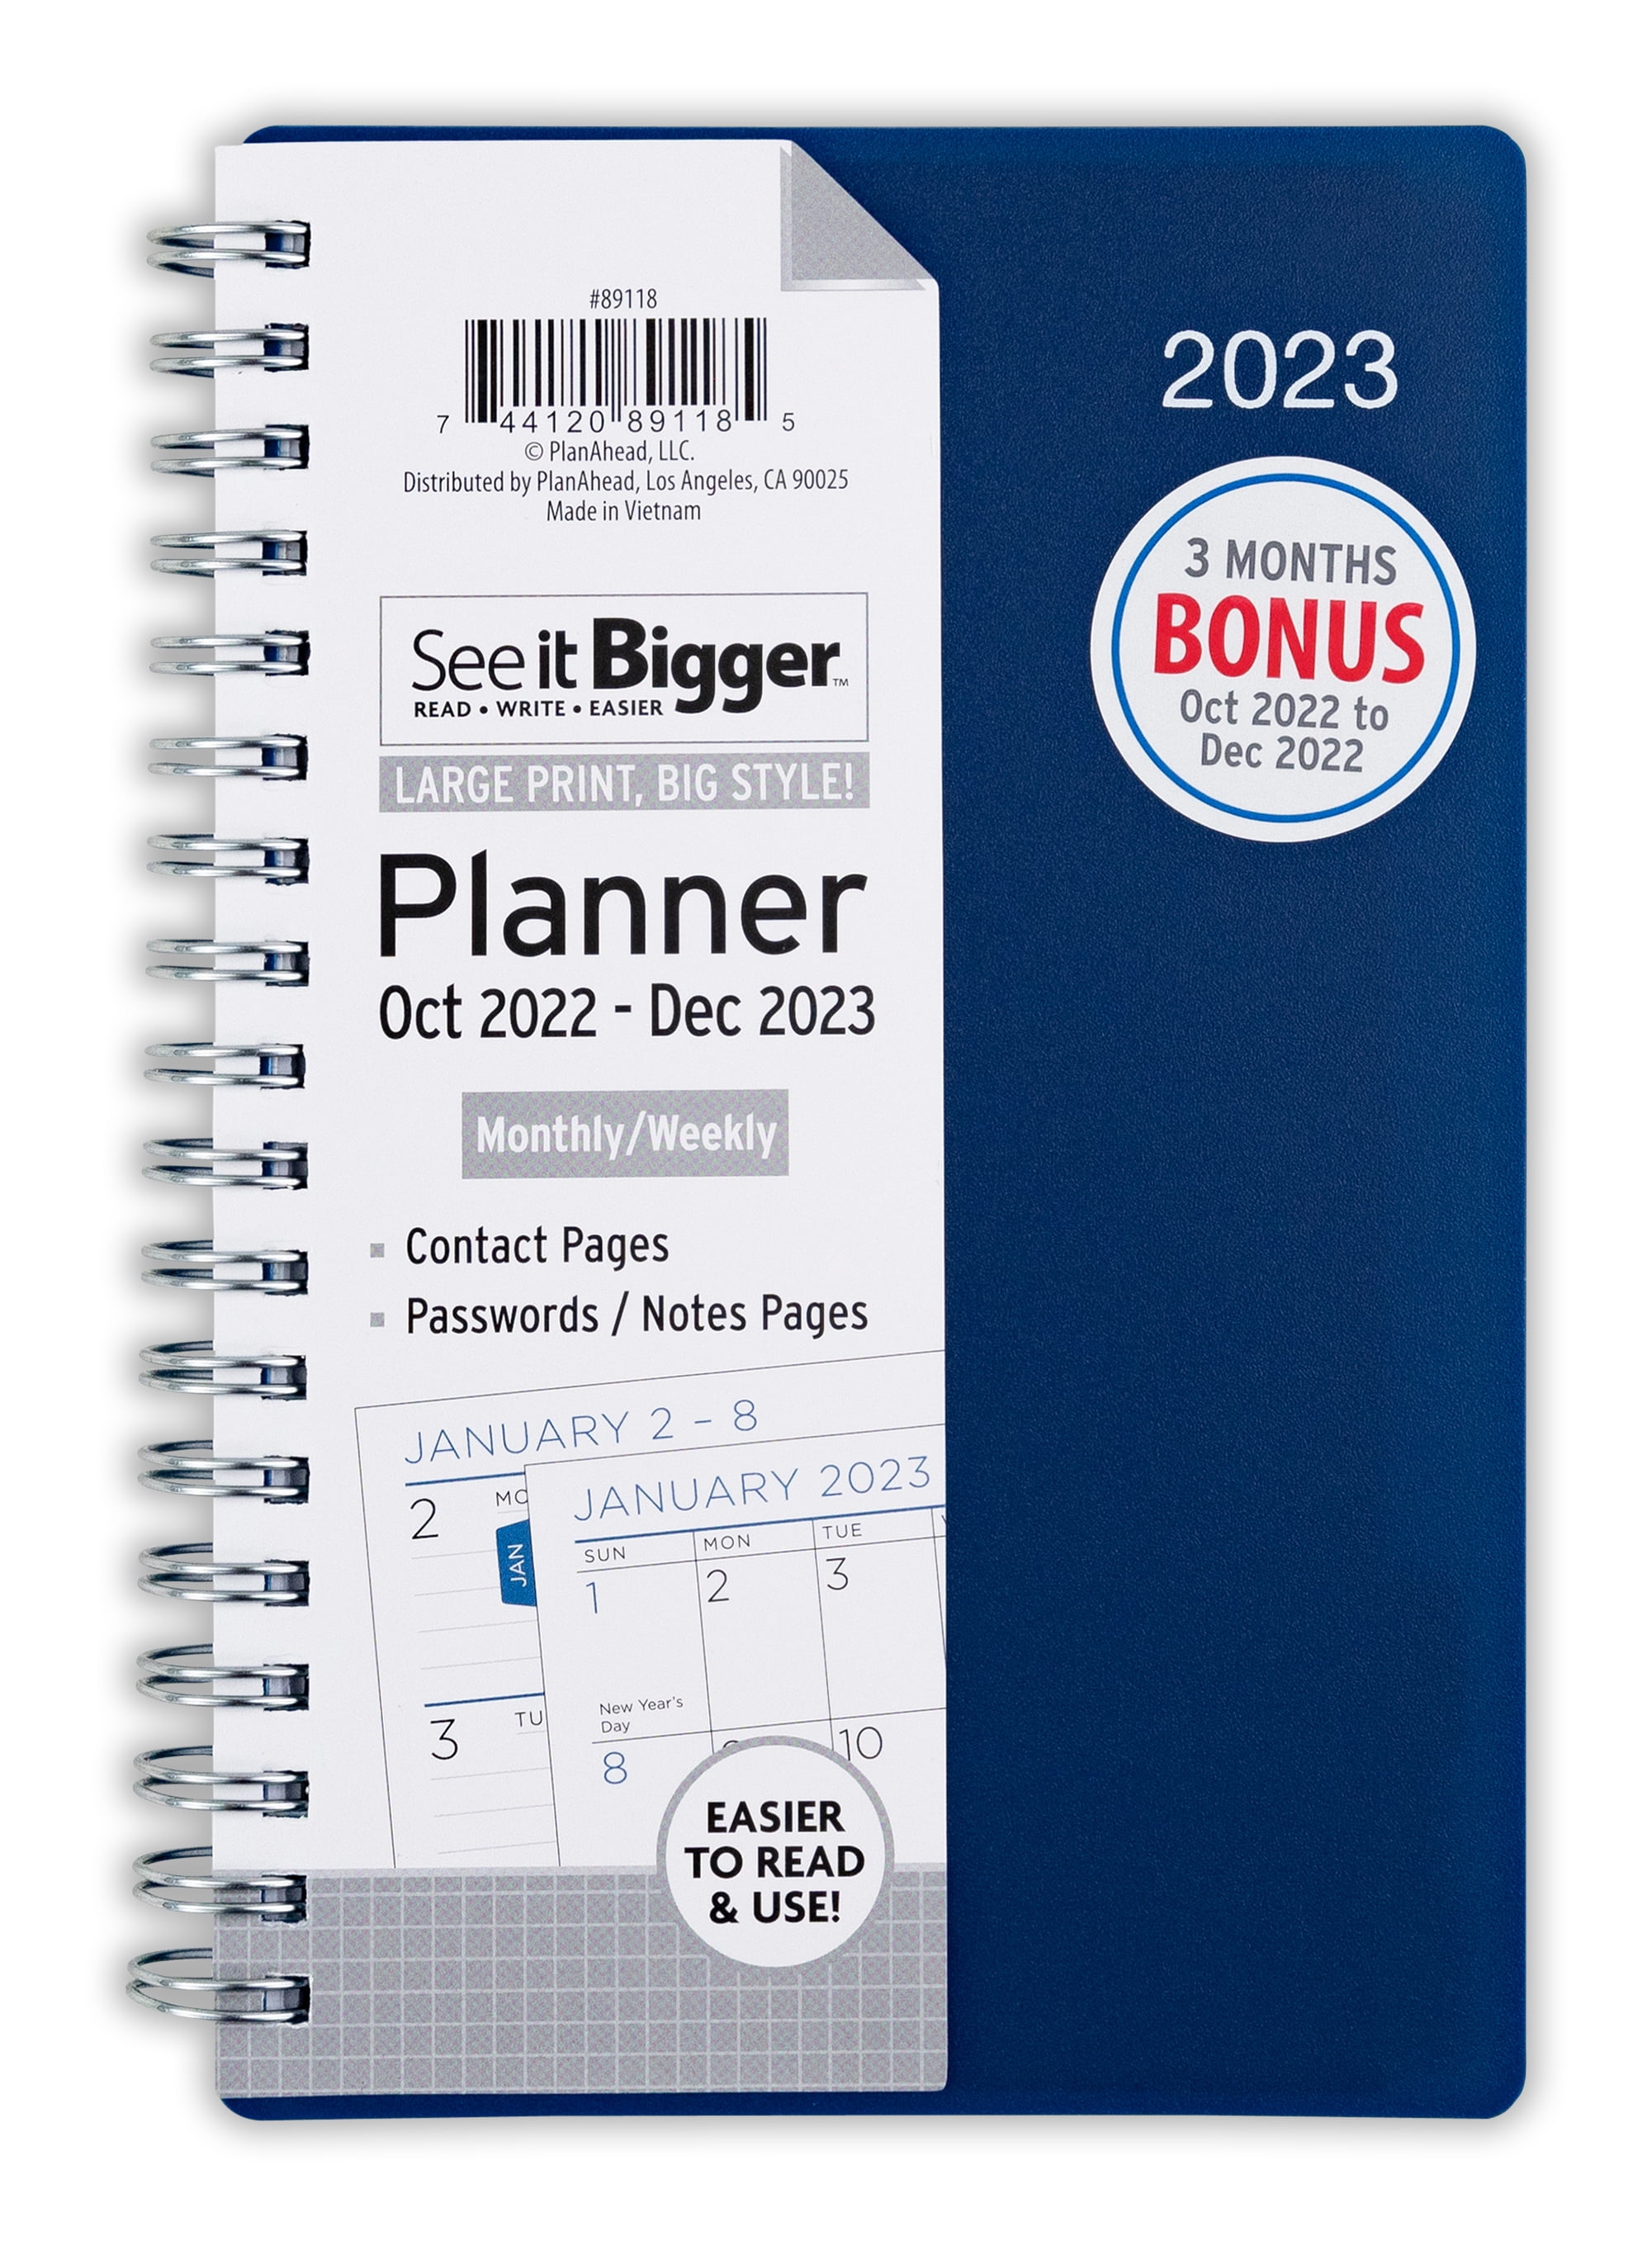 see-it-bigger-monthly-weekly-planner-october-2022-december-2023-4